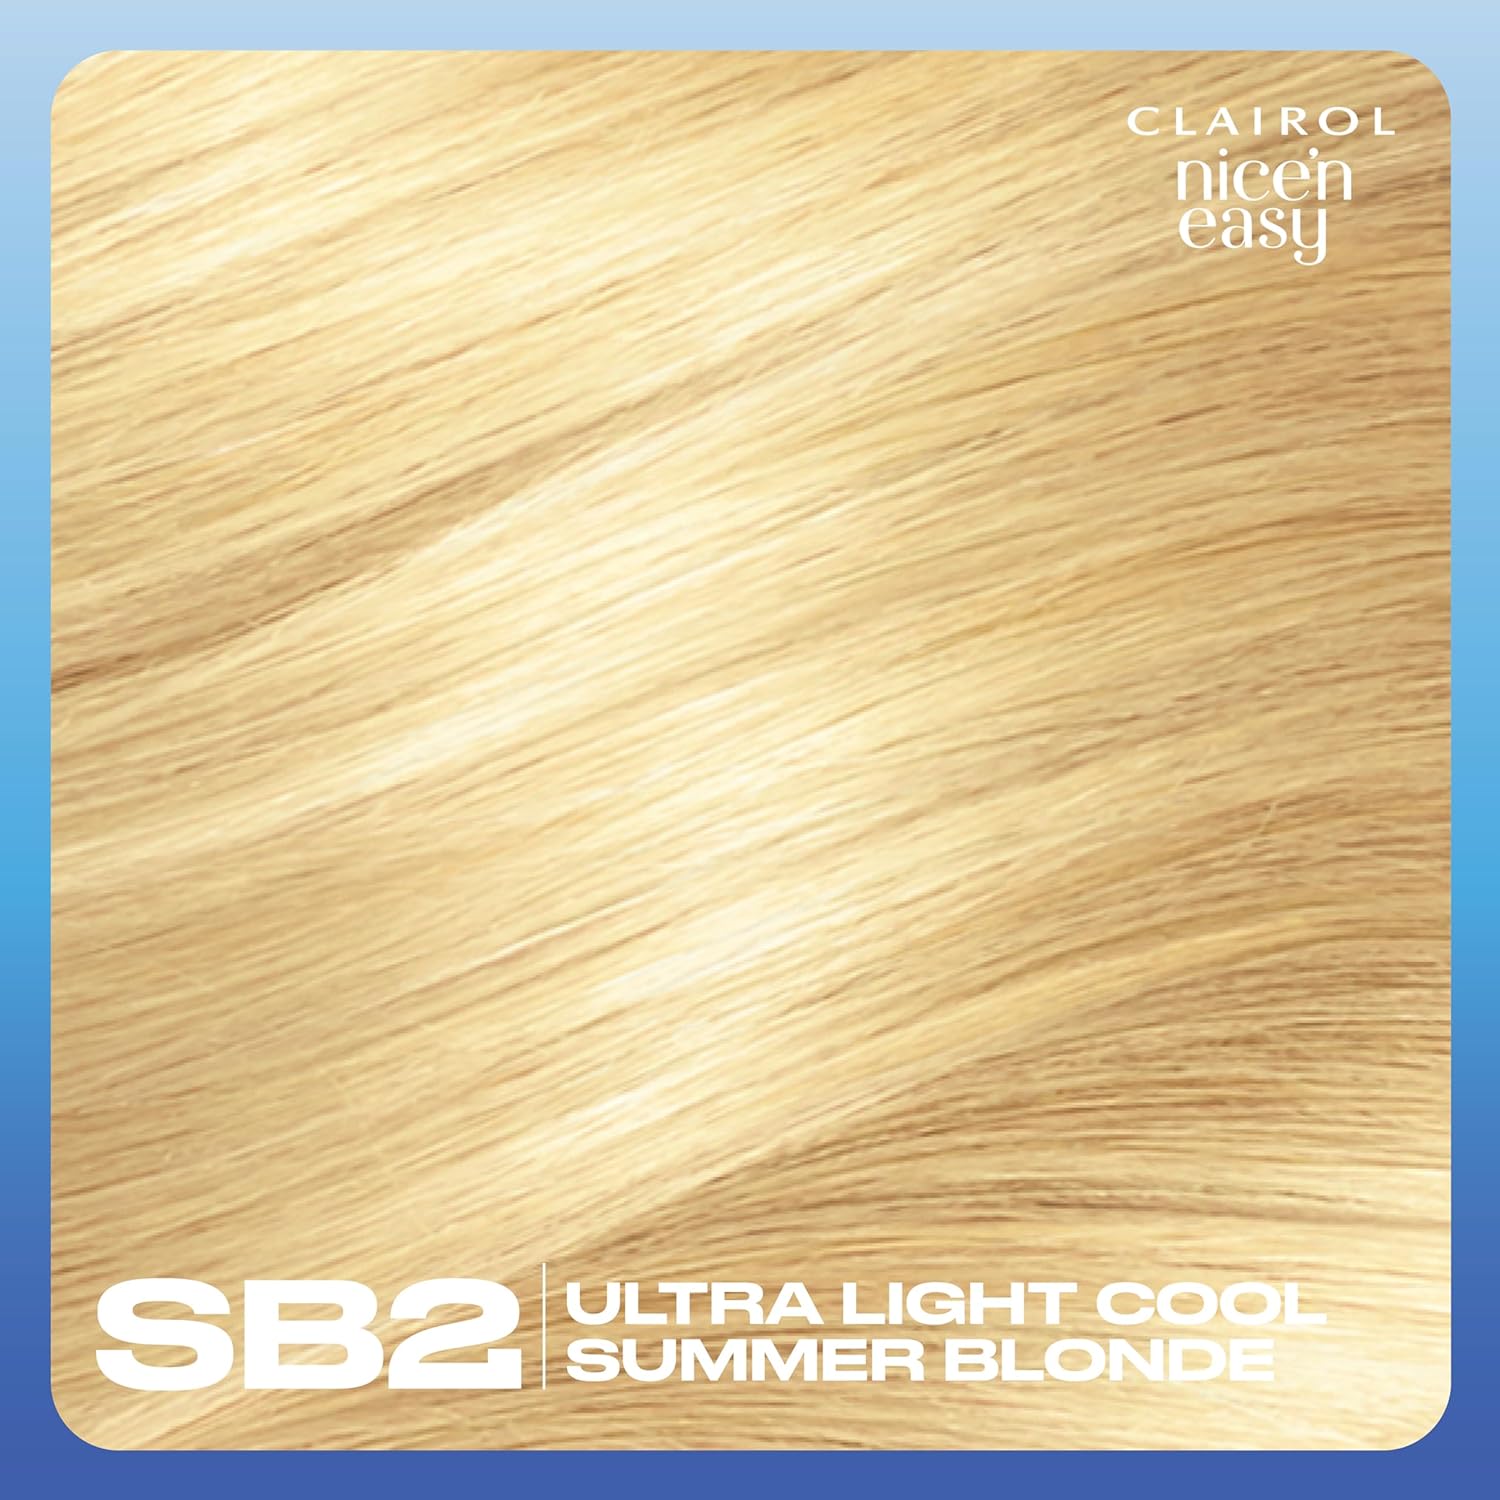 Clairol Nice'n Easy Crème, Permanent Hair Dye, SB2 Ultra Light Cool Summer Blonde